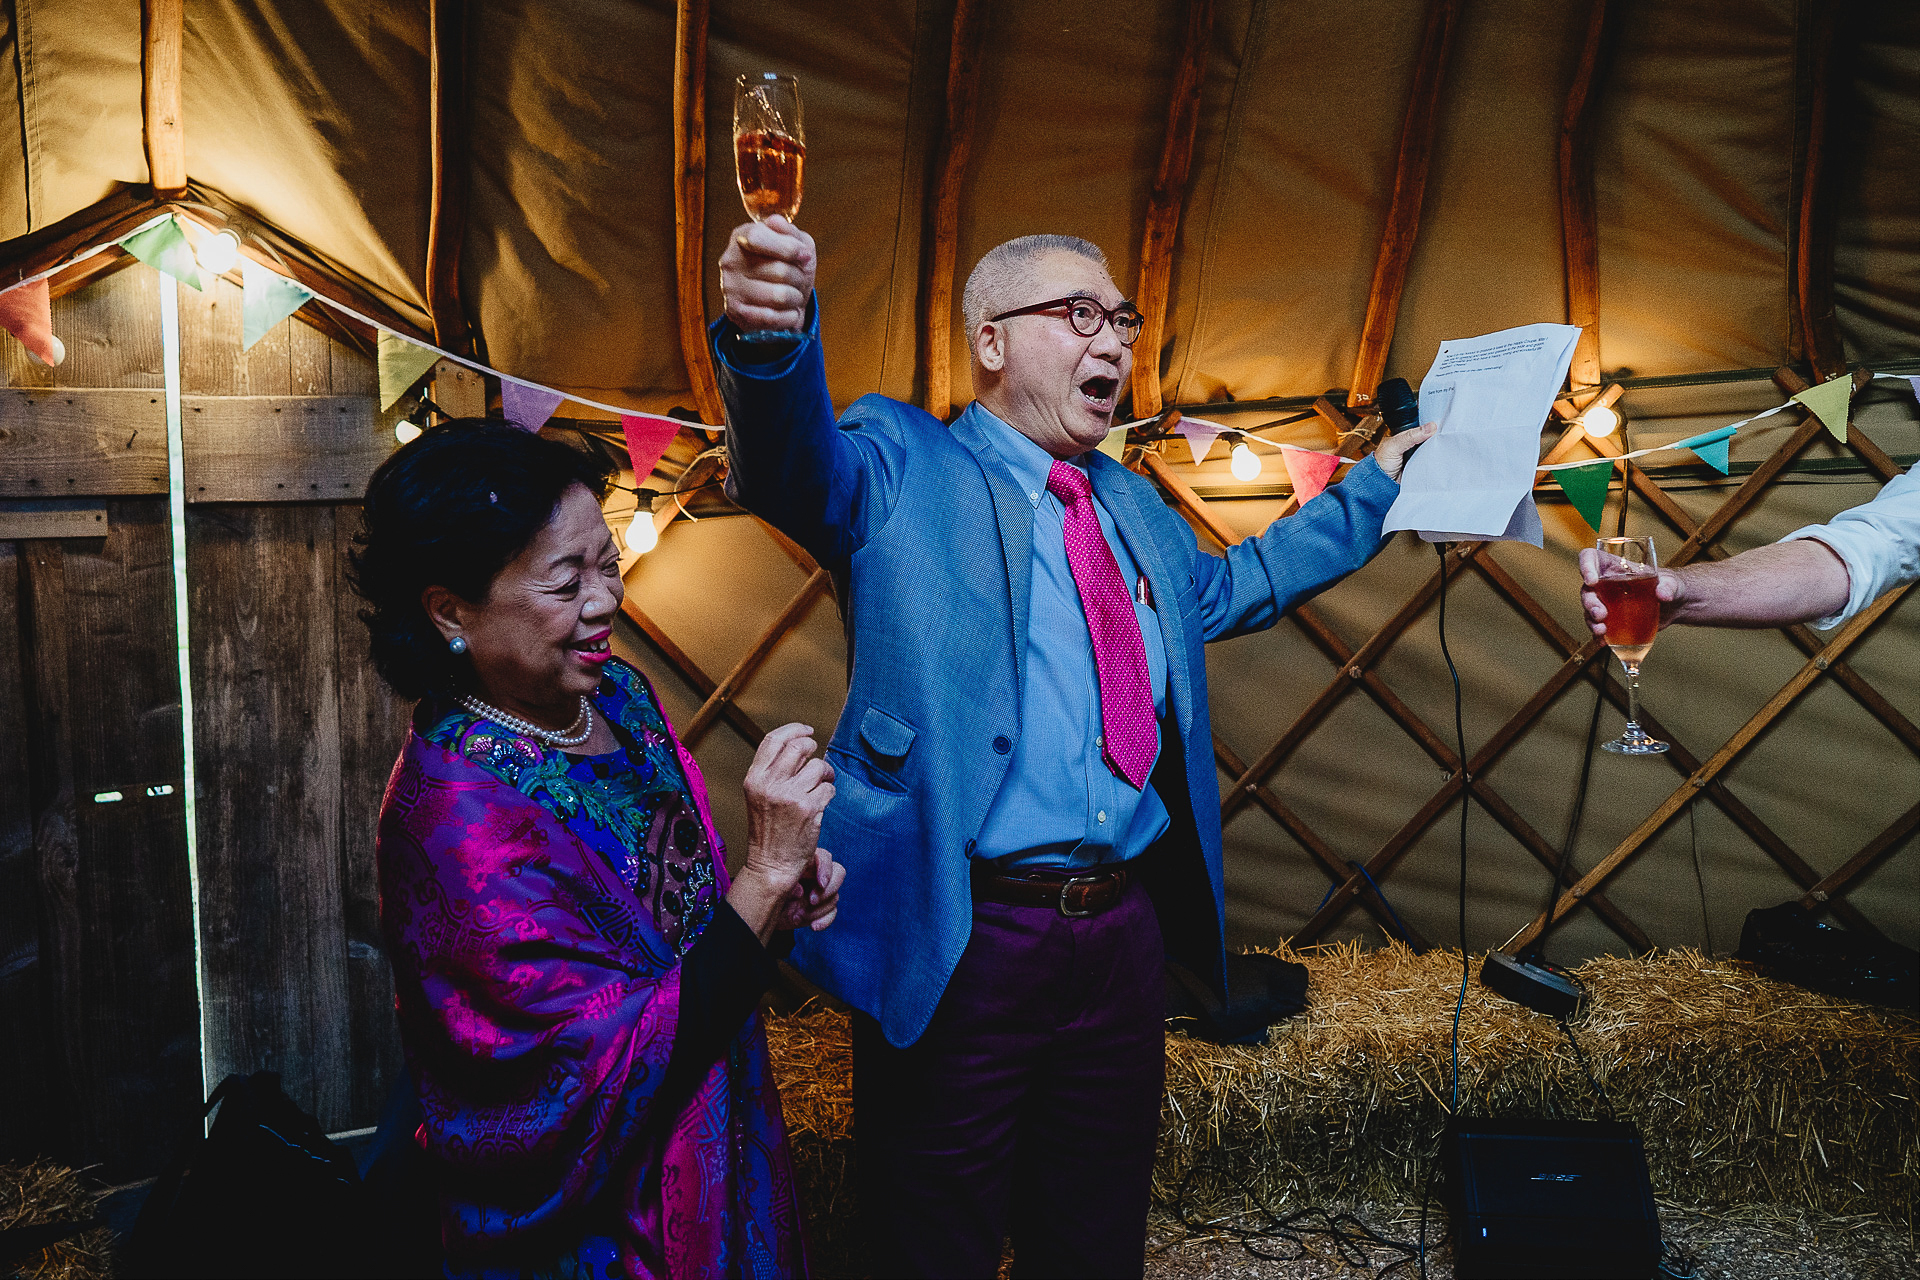 Father of the bride raising a joyful toast in a yurt